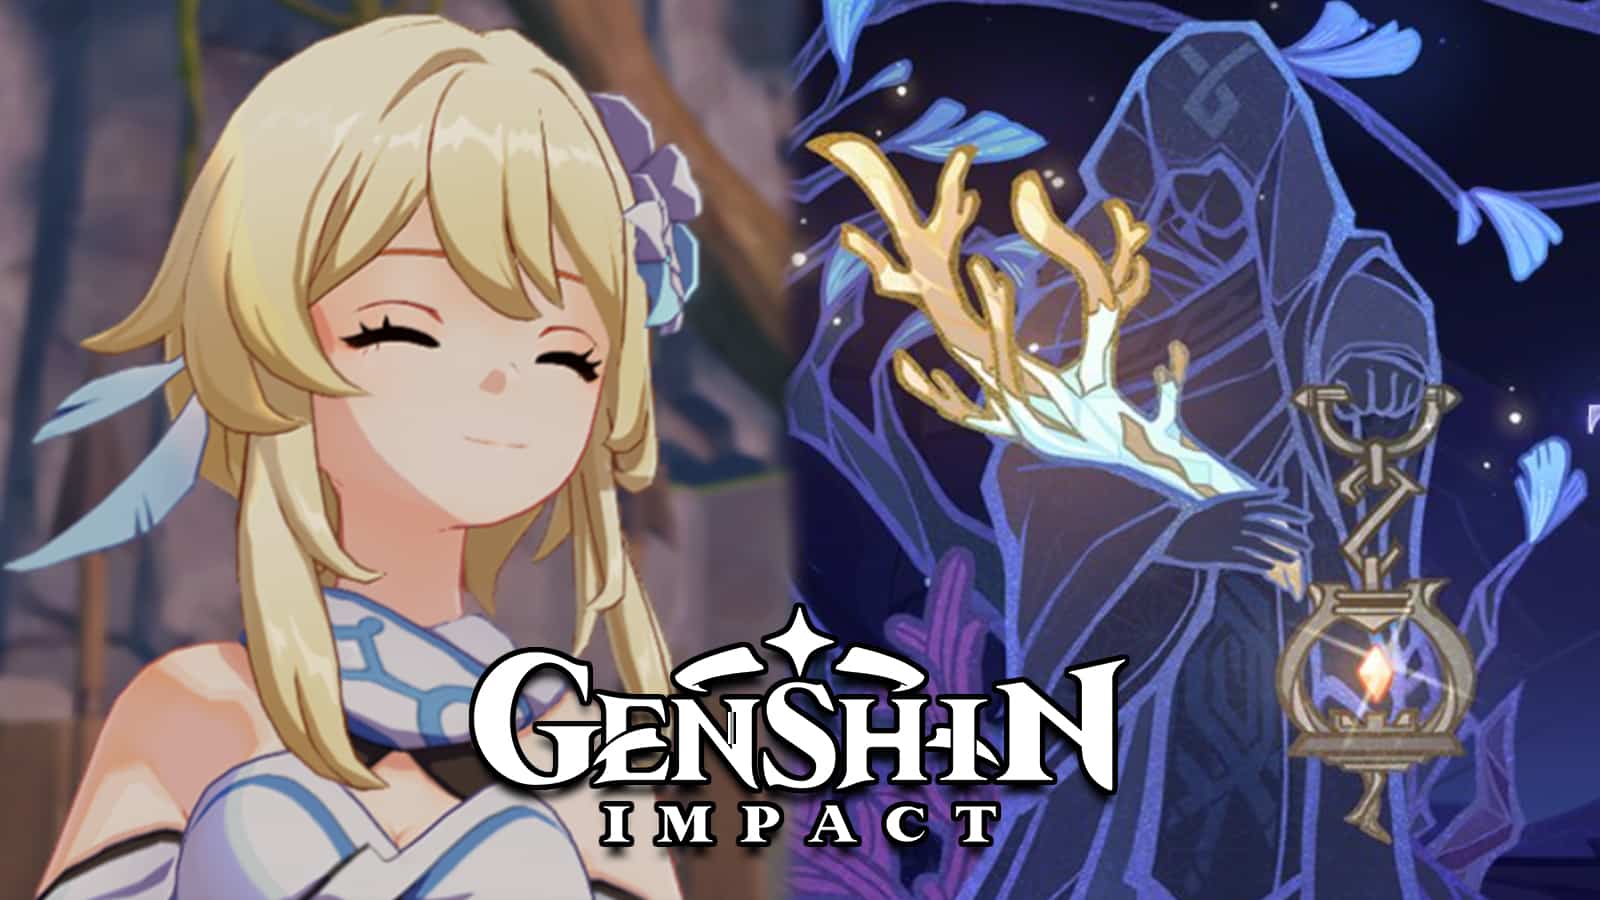 Genshin Impact Traveler next to update 2.5 event artwork screenshot.